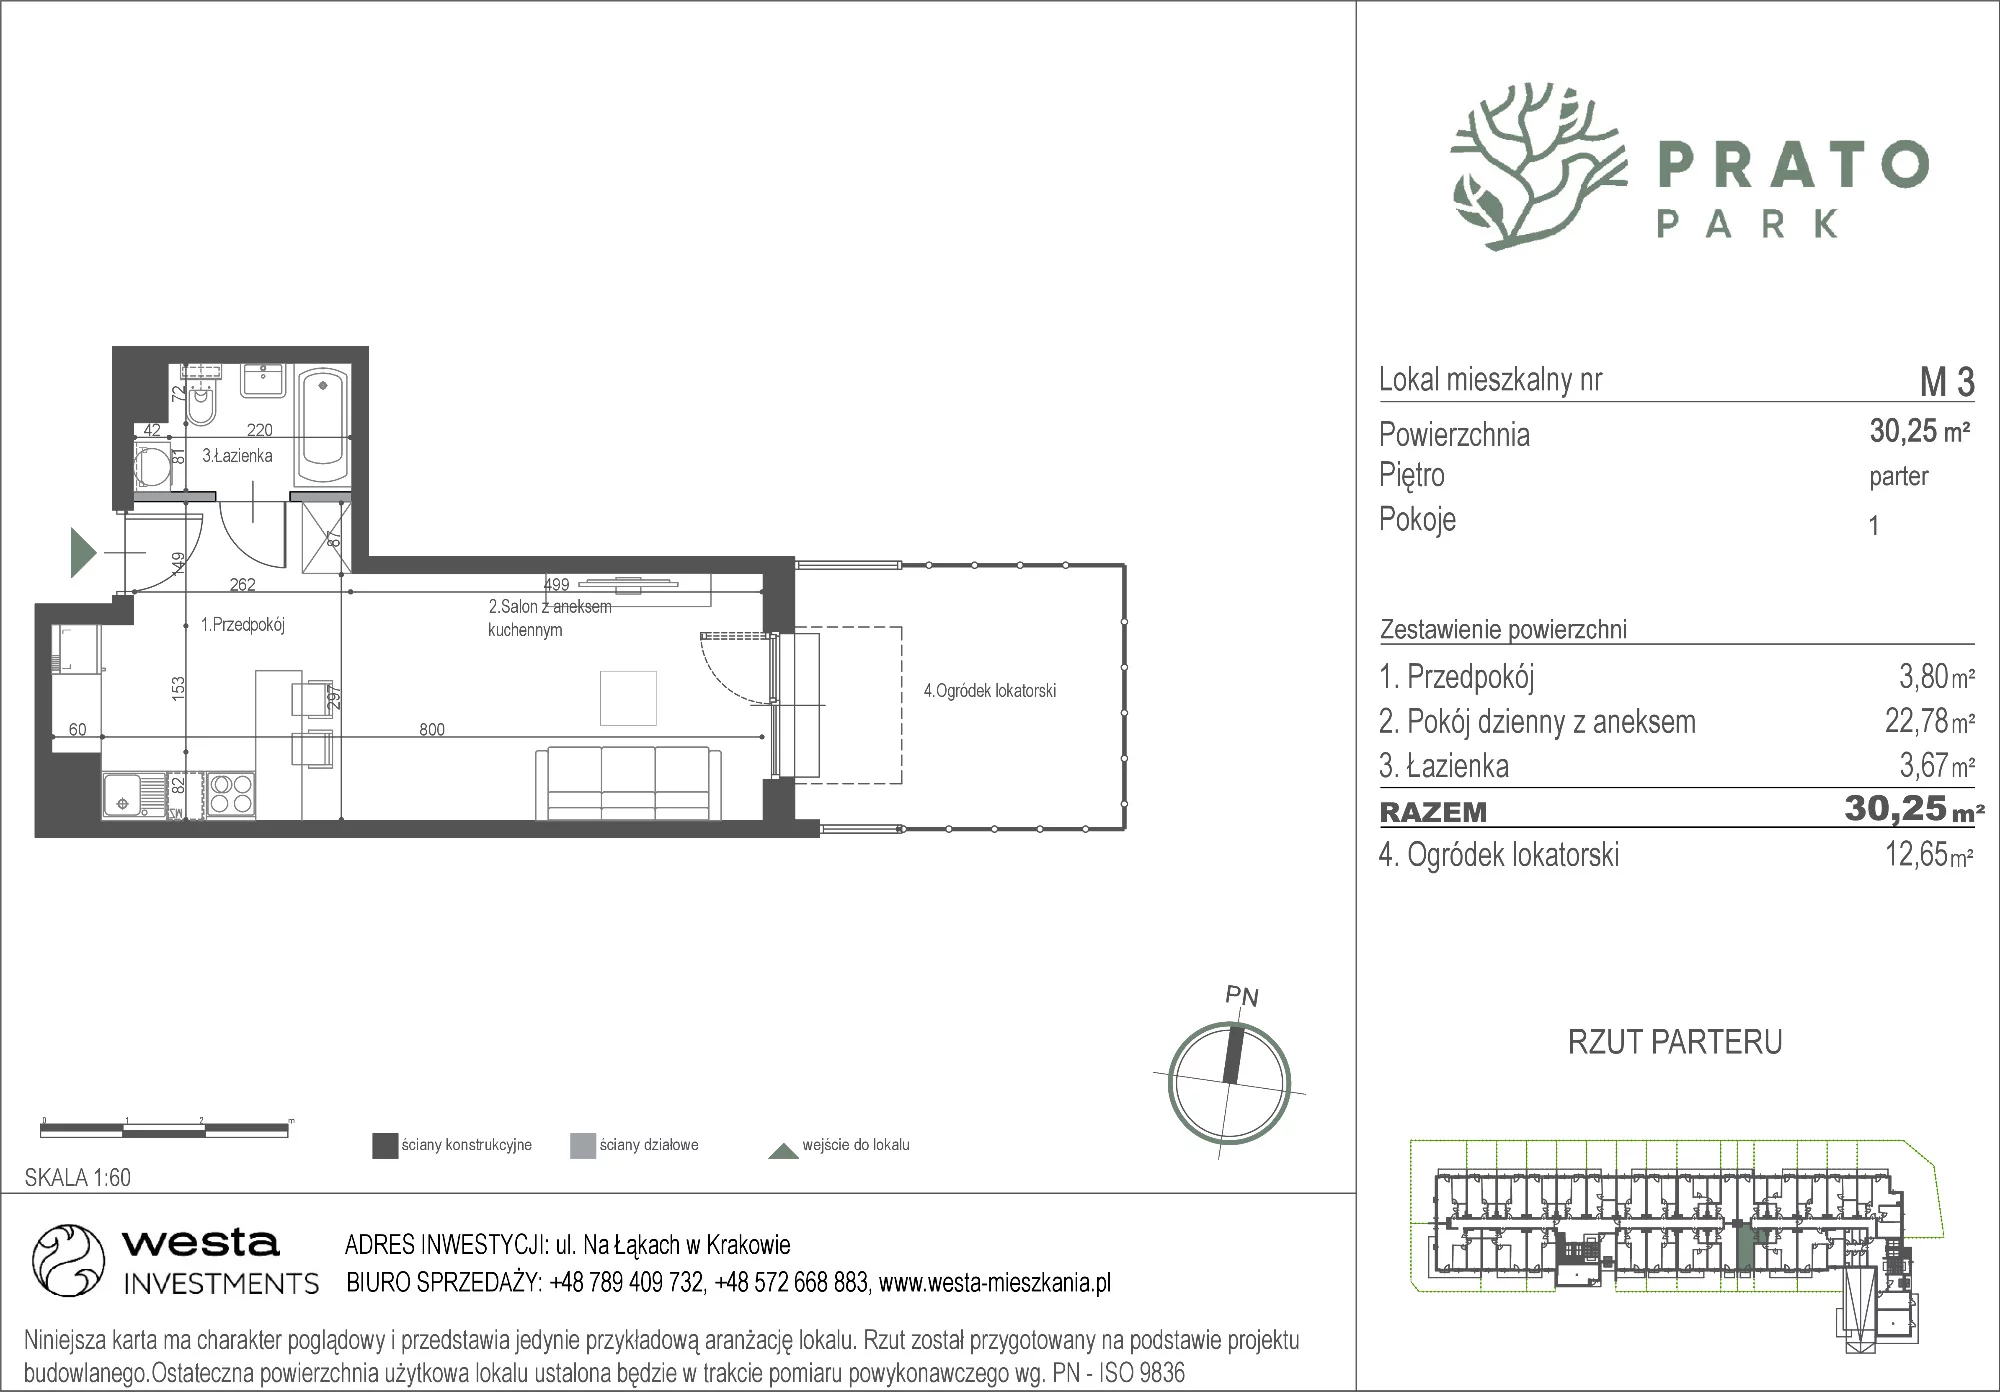 Mieszkanie 30,25 m², parter, oferta nr M3, Prato Park, Kraków, Czyżyny, ul. Na Łąkach